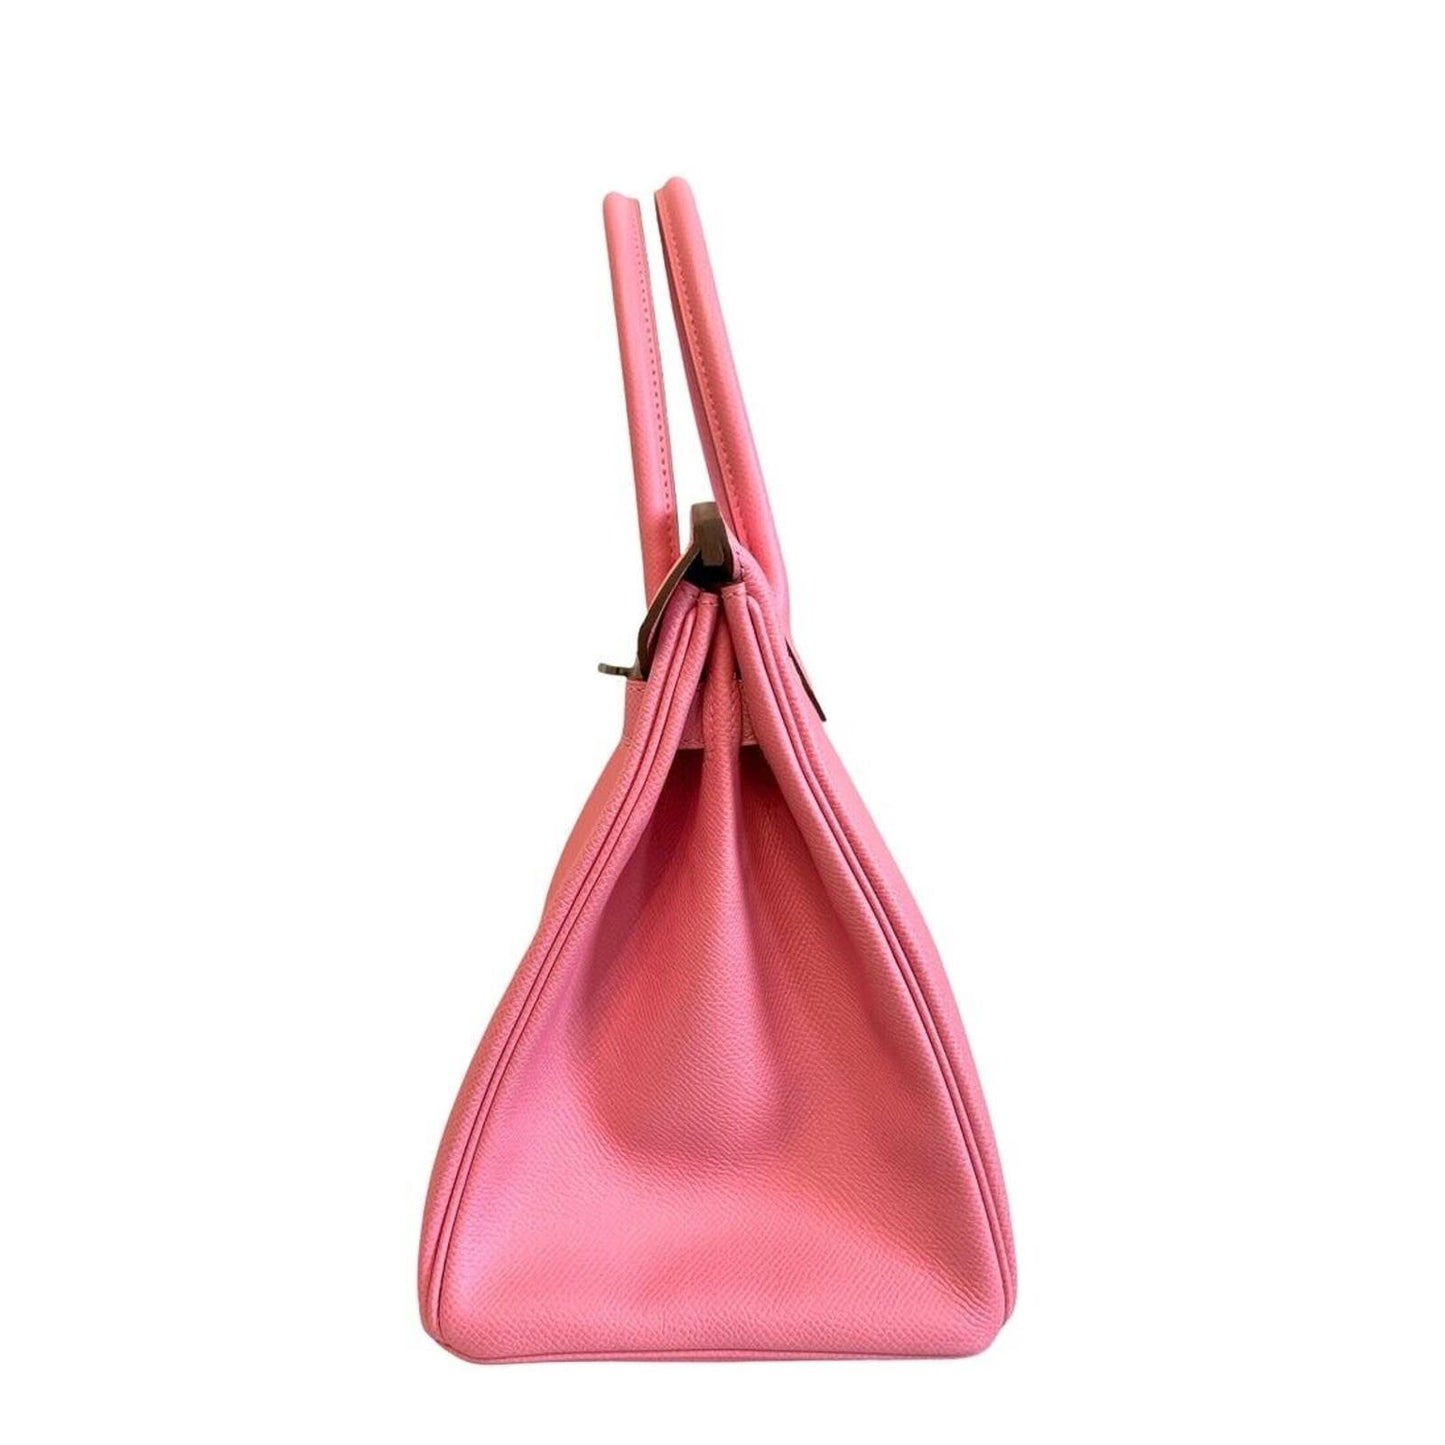 Hermes Birkin 30 Rose Confetti Pink Epsom Leather Bag Handbag Palladium Hardware